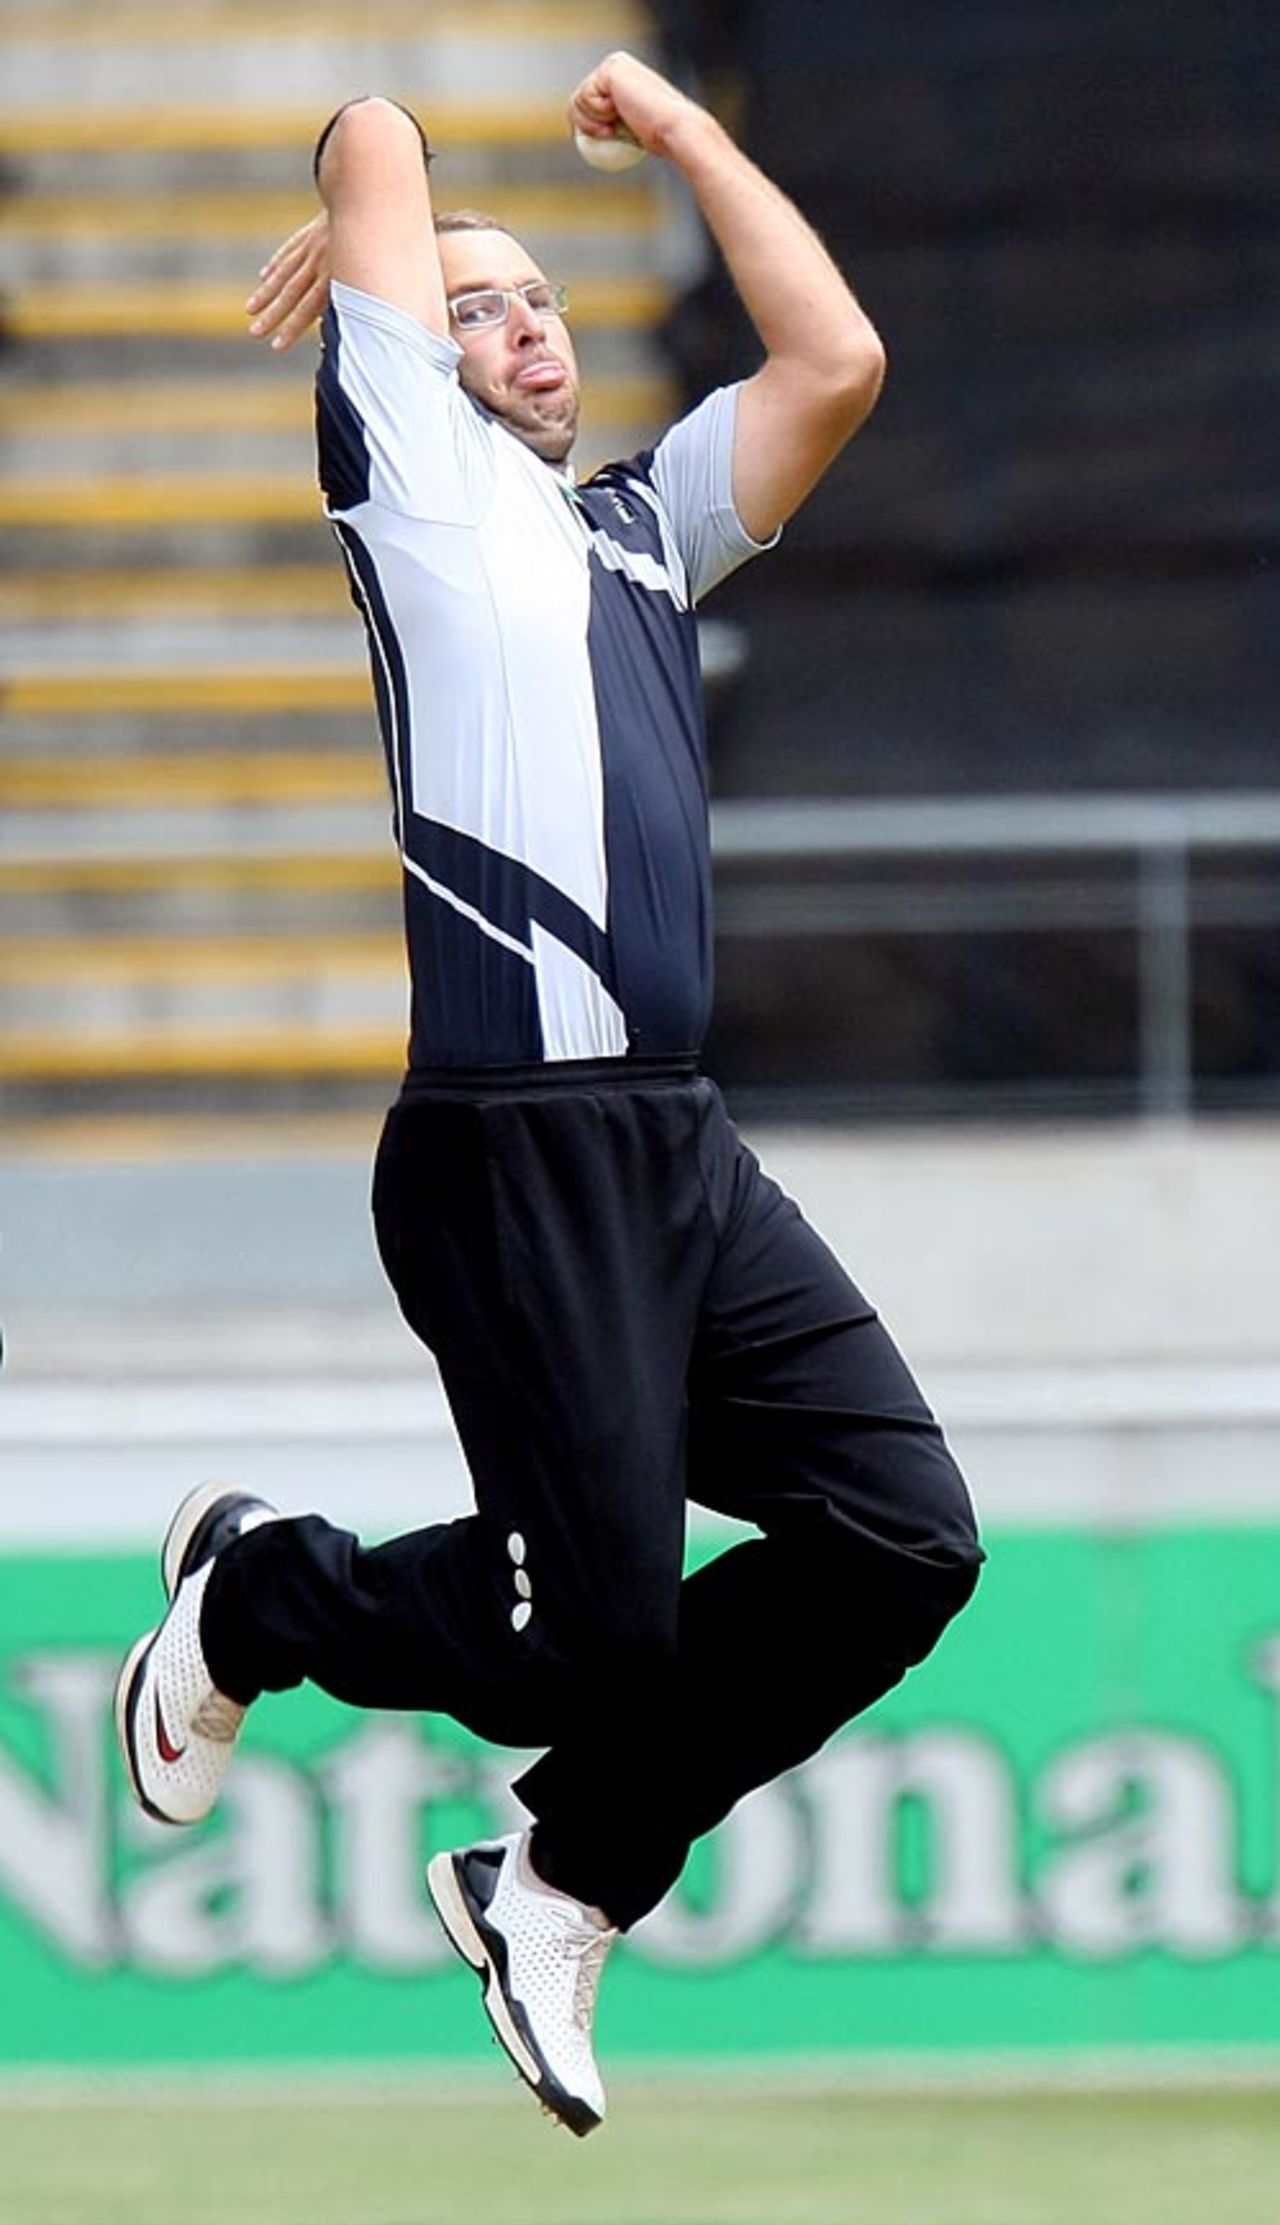 Daniel Vettori in action, New Zealand v West Indies, 3rd ODI, Wellington, January 7, 2009